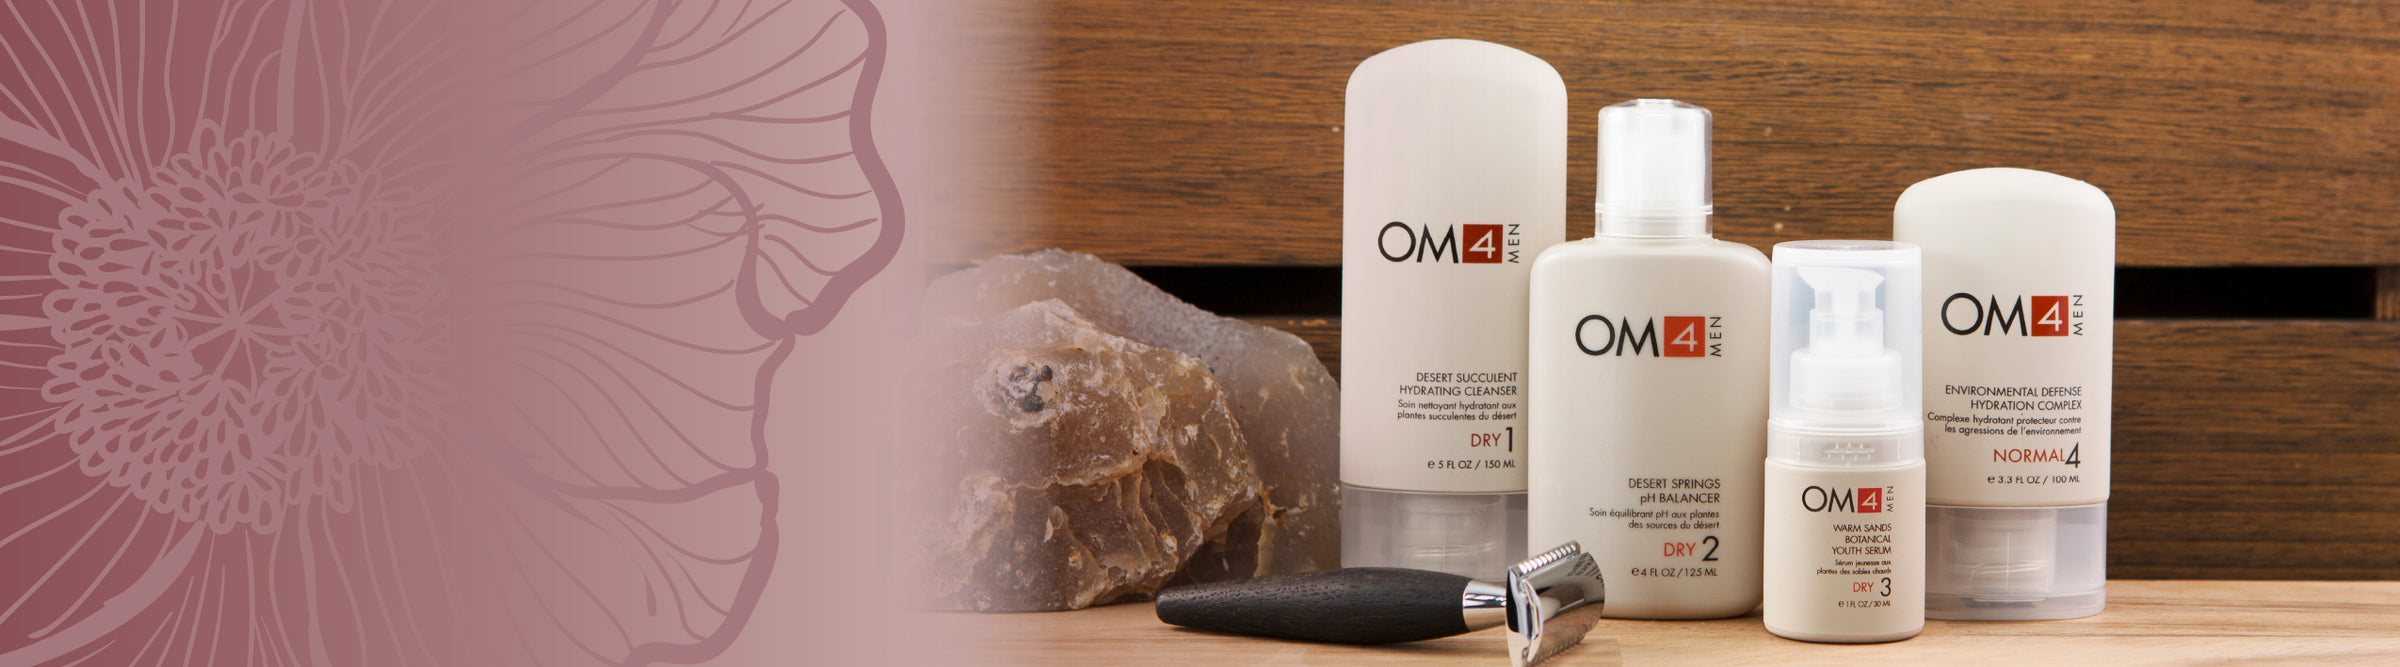 OM4 Organic Male - Dry